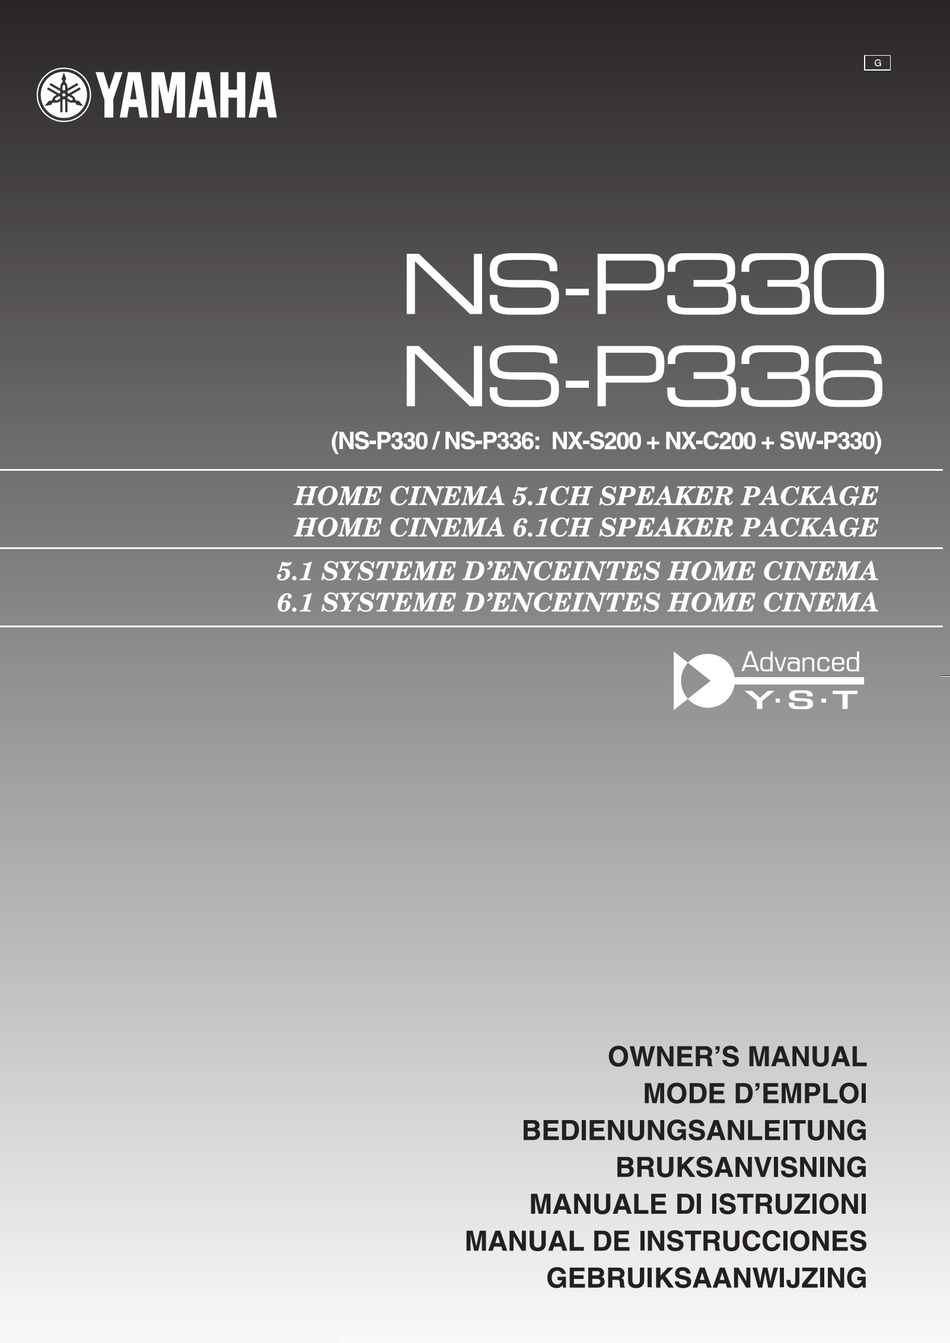 YAMAHA NS-P336 OWNER'S MANUAL Pdf Download | ManualsLib